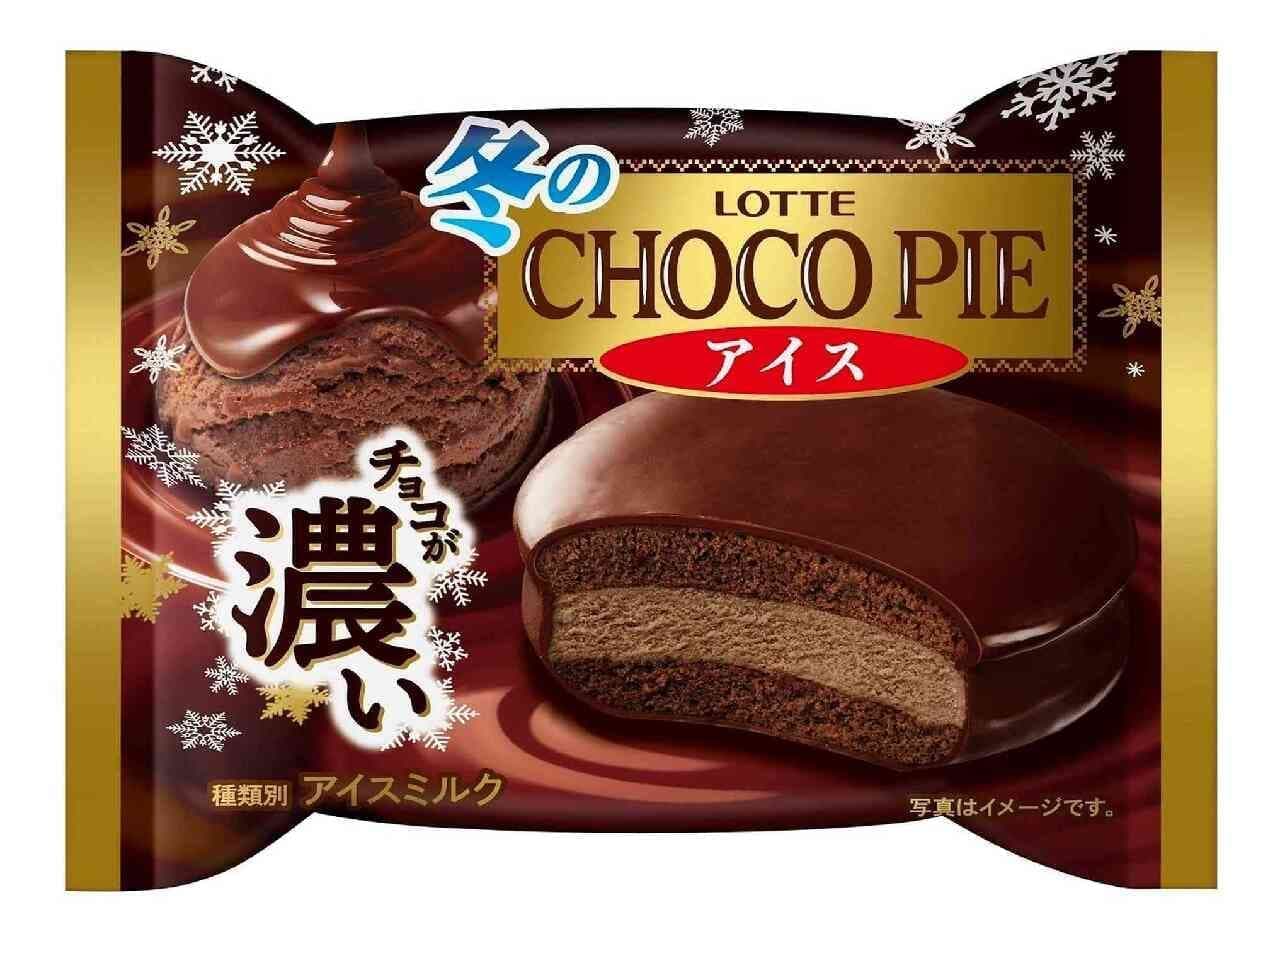 Lotte "Winter Choco Pie Ice Cream